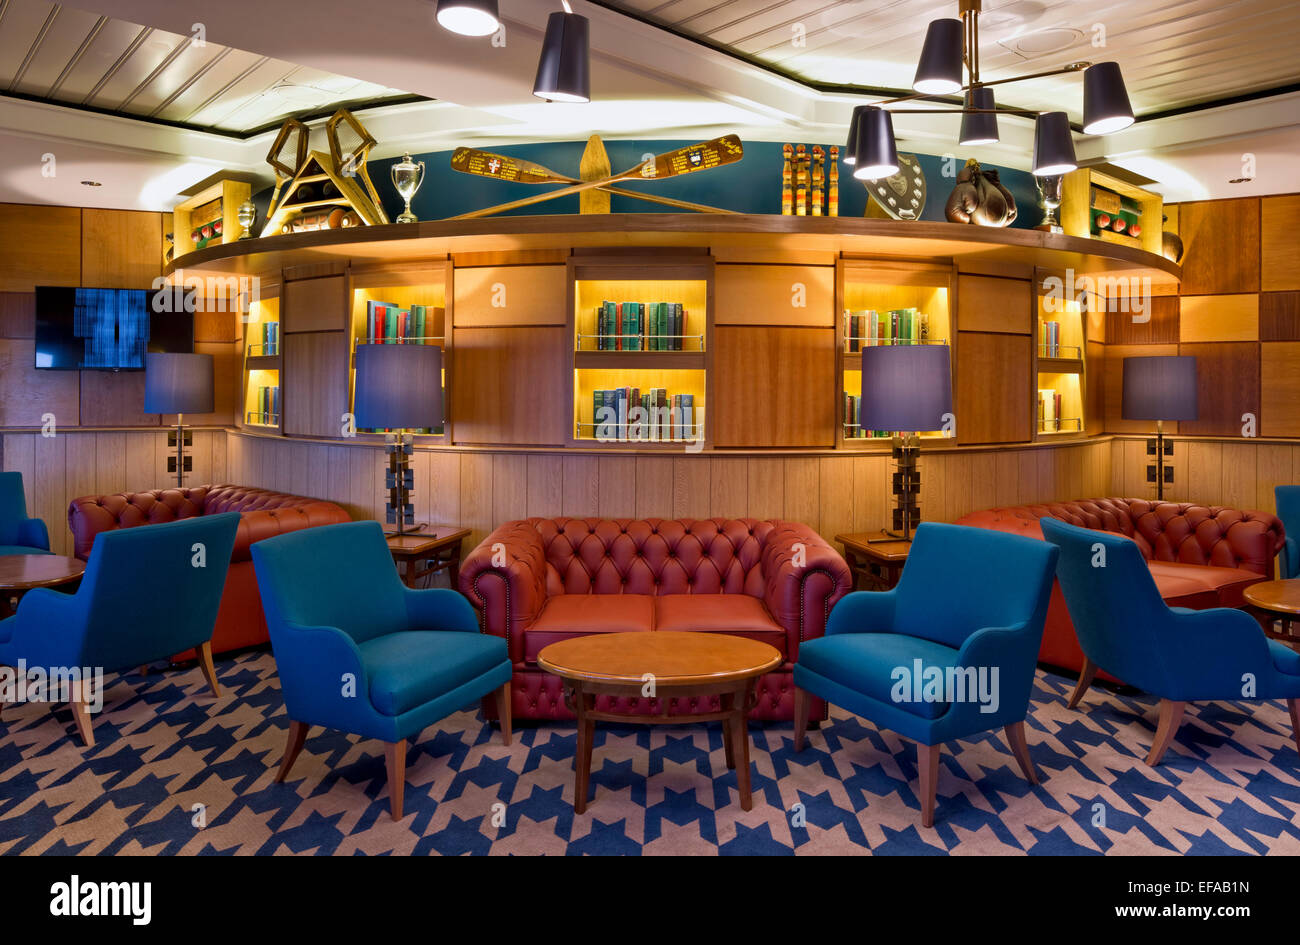 P&O Cruise Ship Interiors, Southampton, United Kingdom. Architect: SMC Design, 2014. Lounge furnishing. Stock Photo